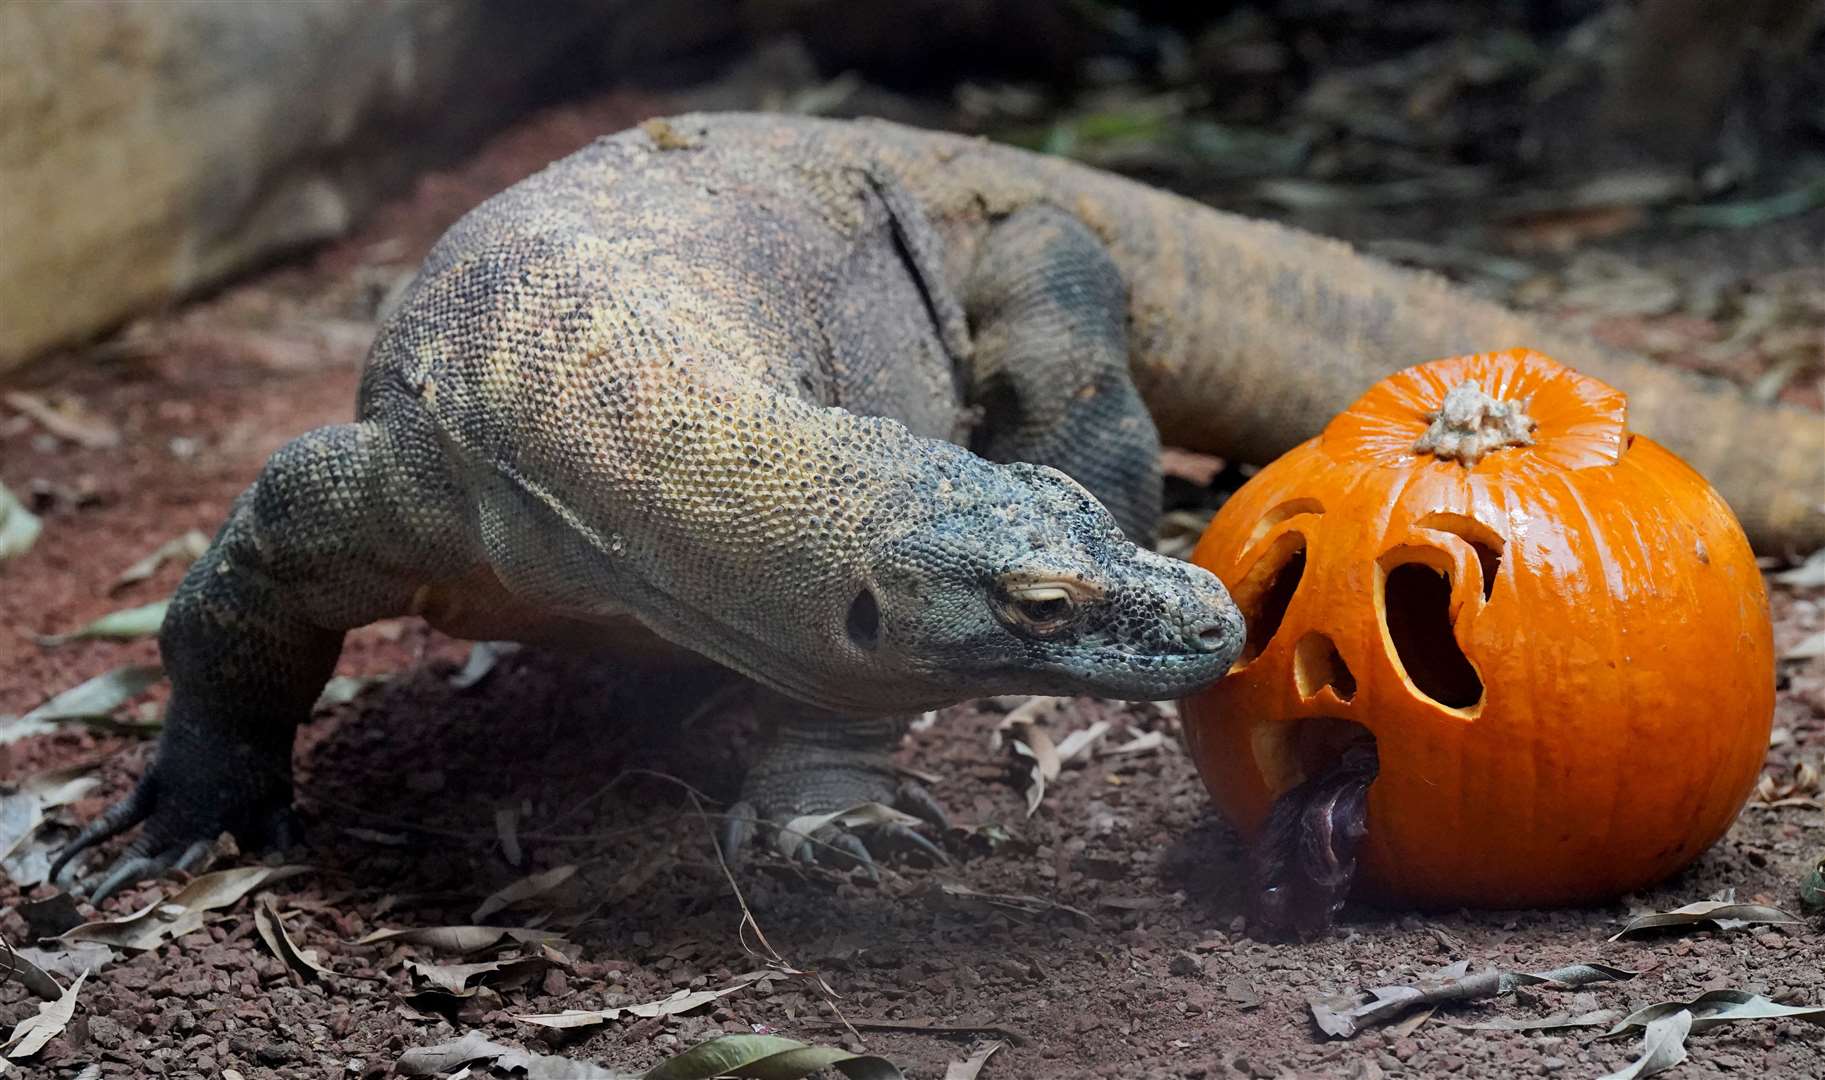 A Komodo dragon investigates its pumpkin treat (Jonathan Brady/PA)